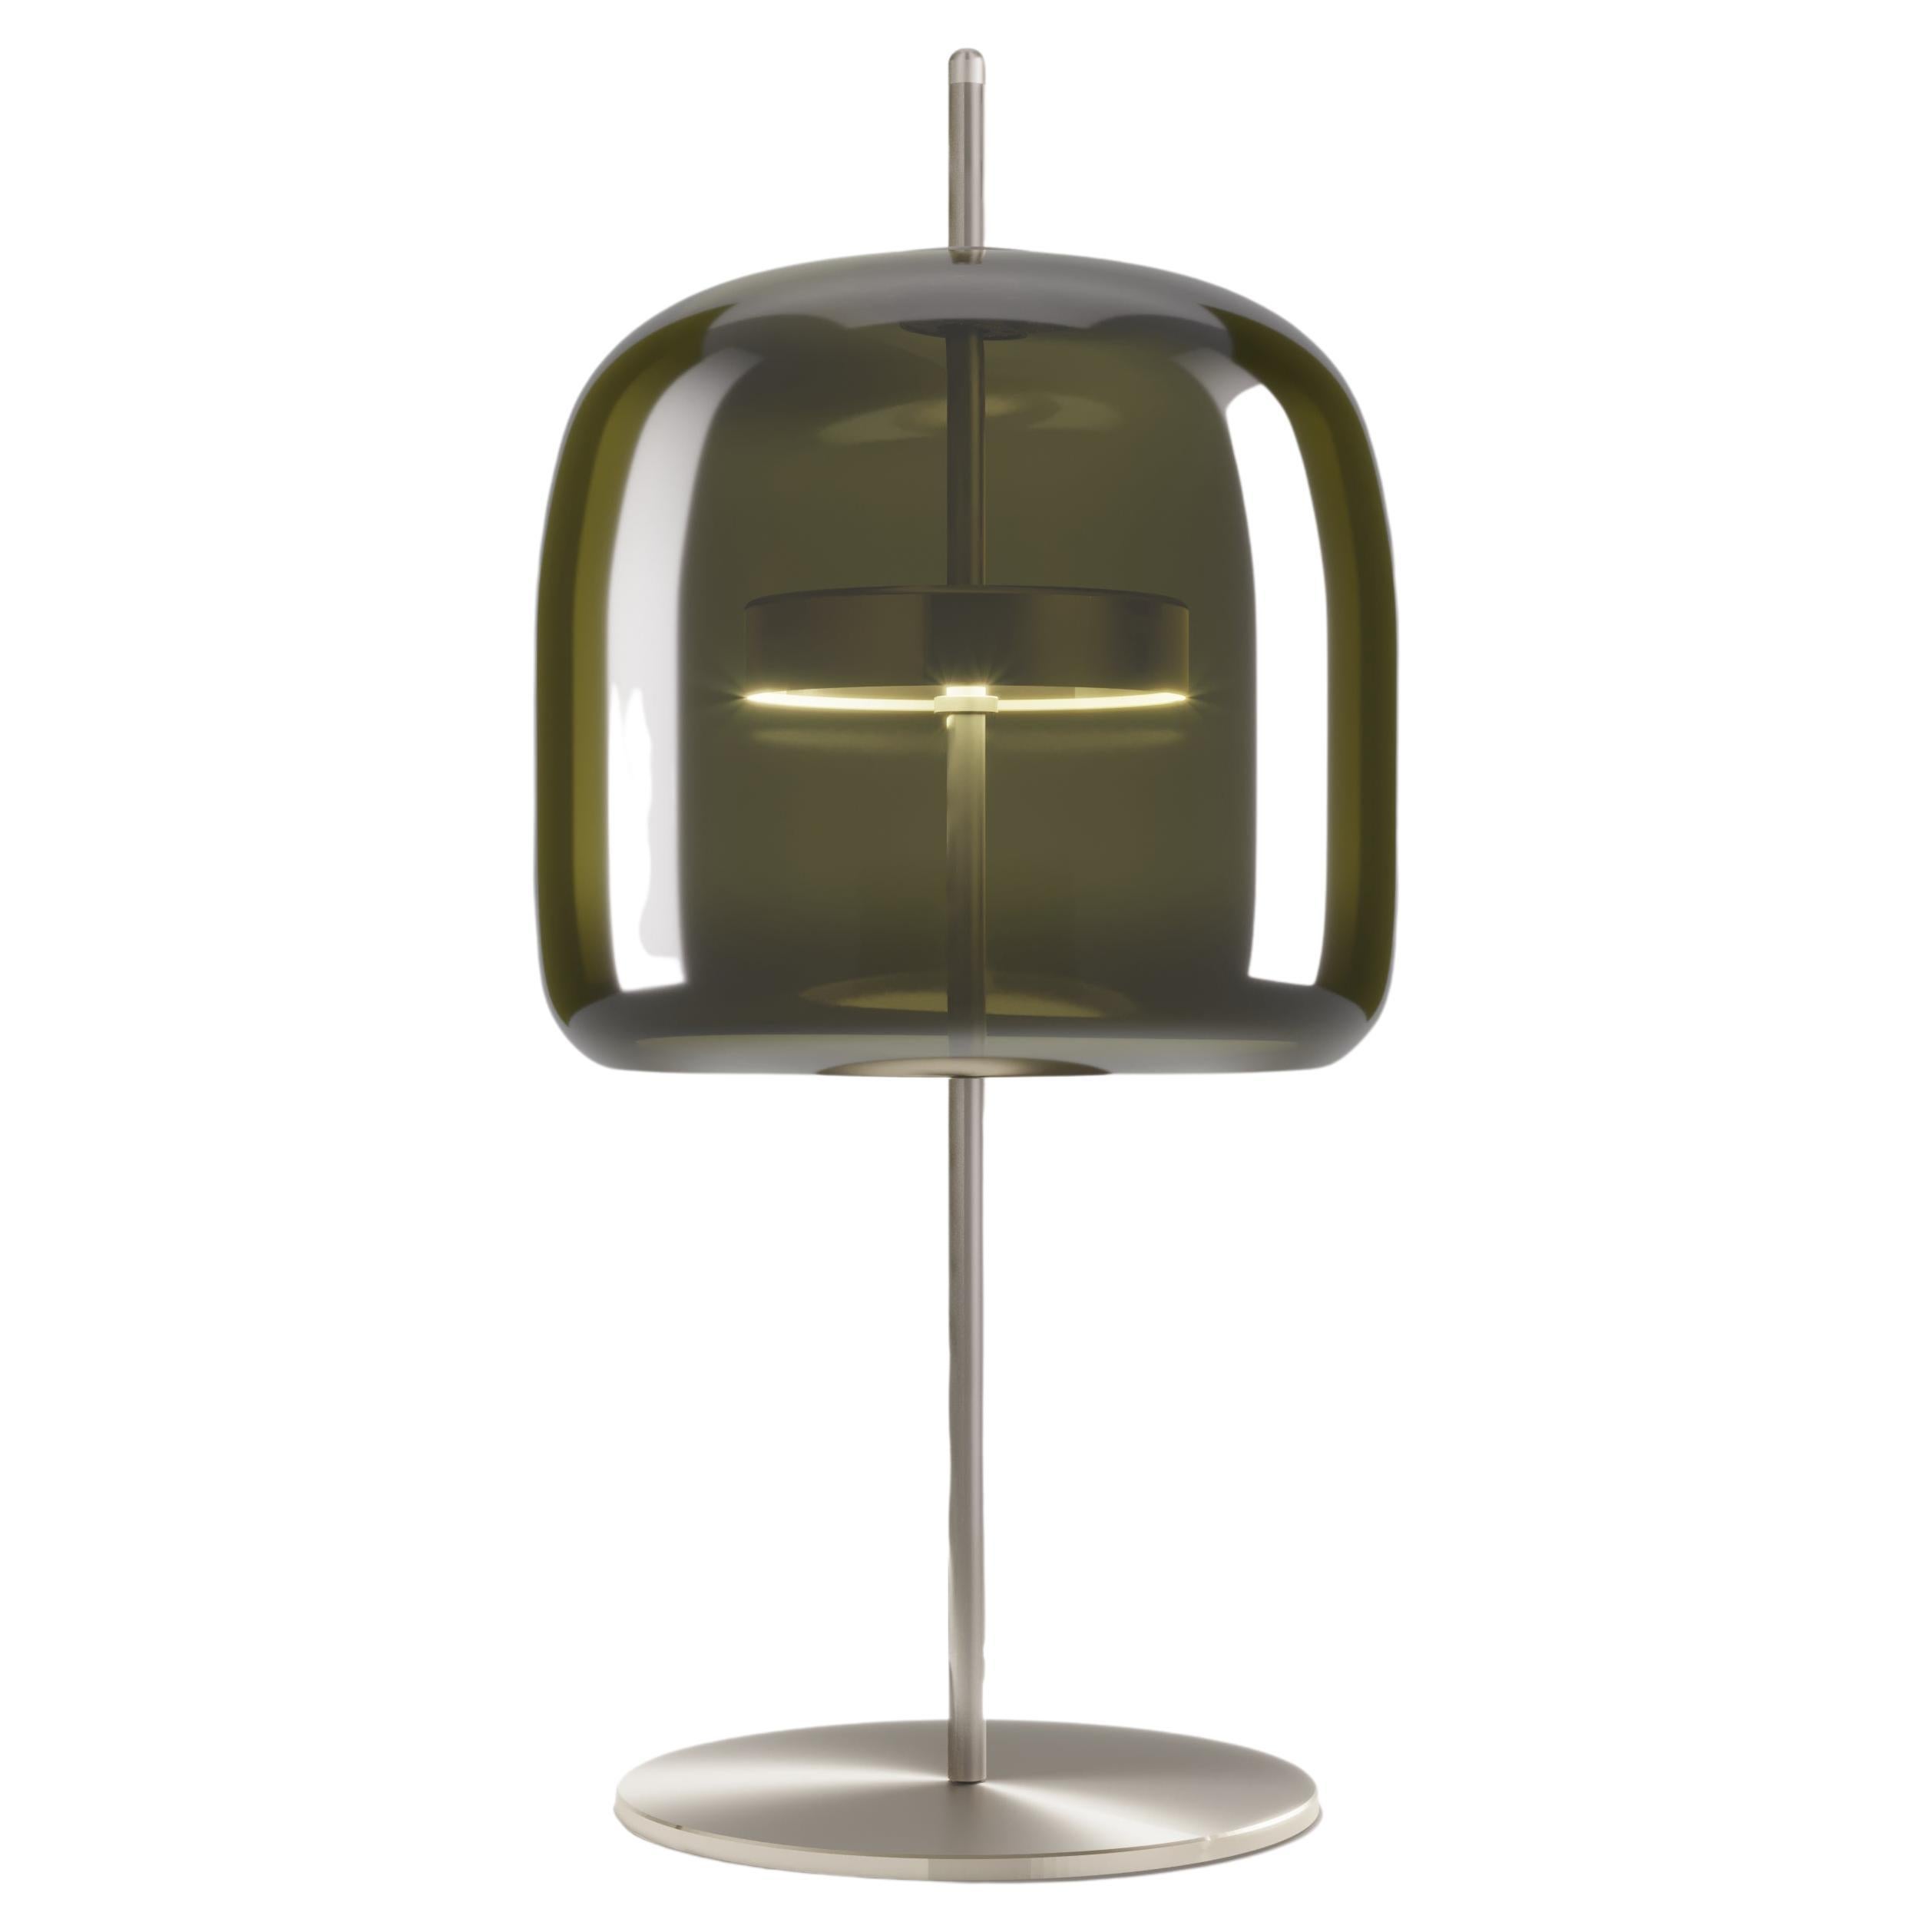 Vistosi Jube Table Lamp in Old Green Transparent Glass And Matt Steel Finish